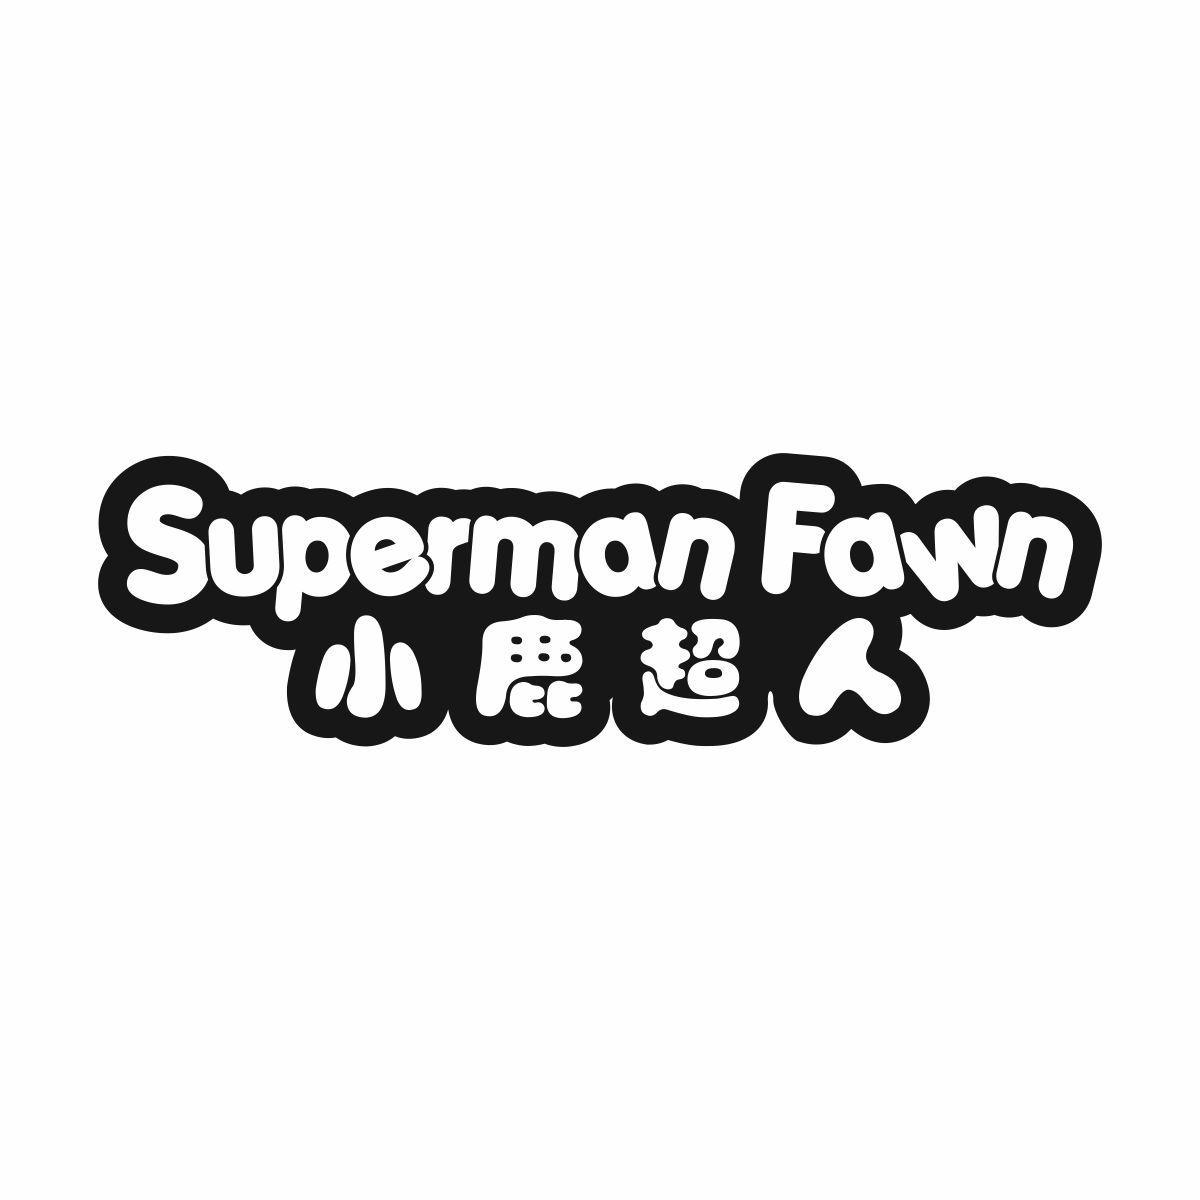 小鹿超人 SUPERMAN FAWN